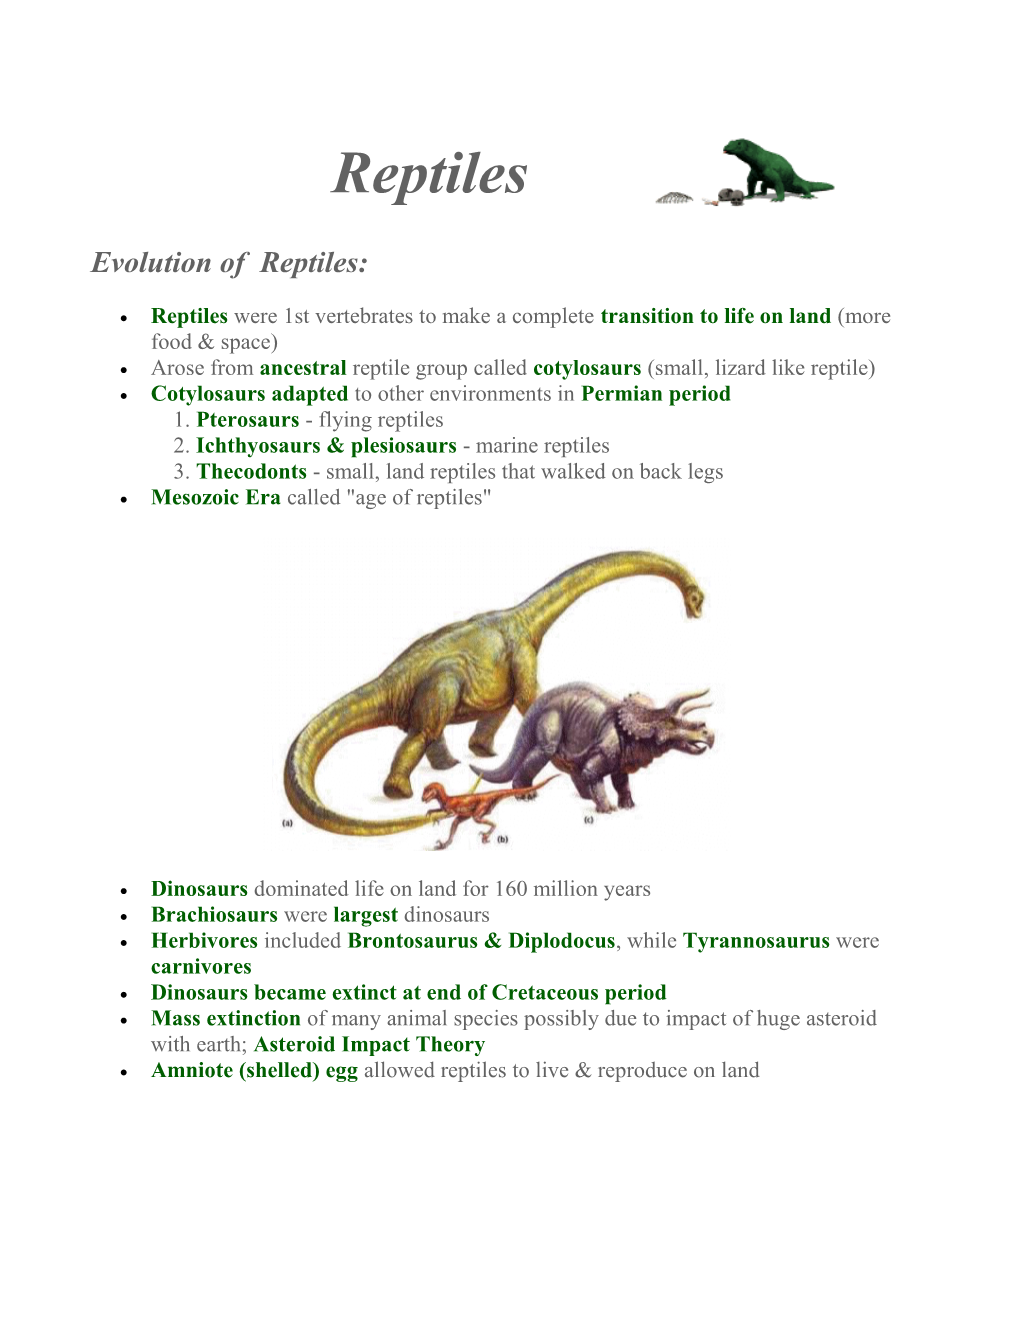 Evolution of Reptiles